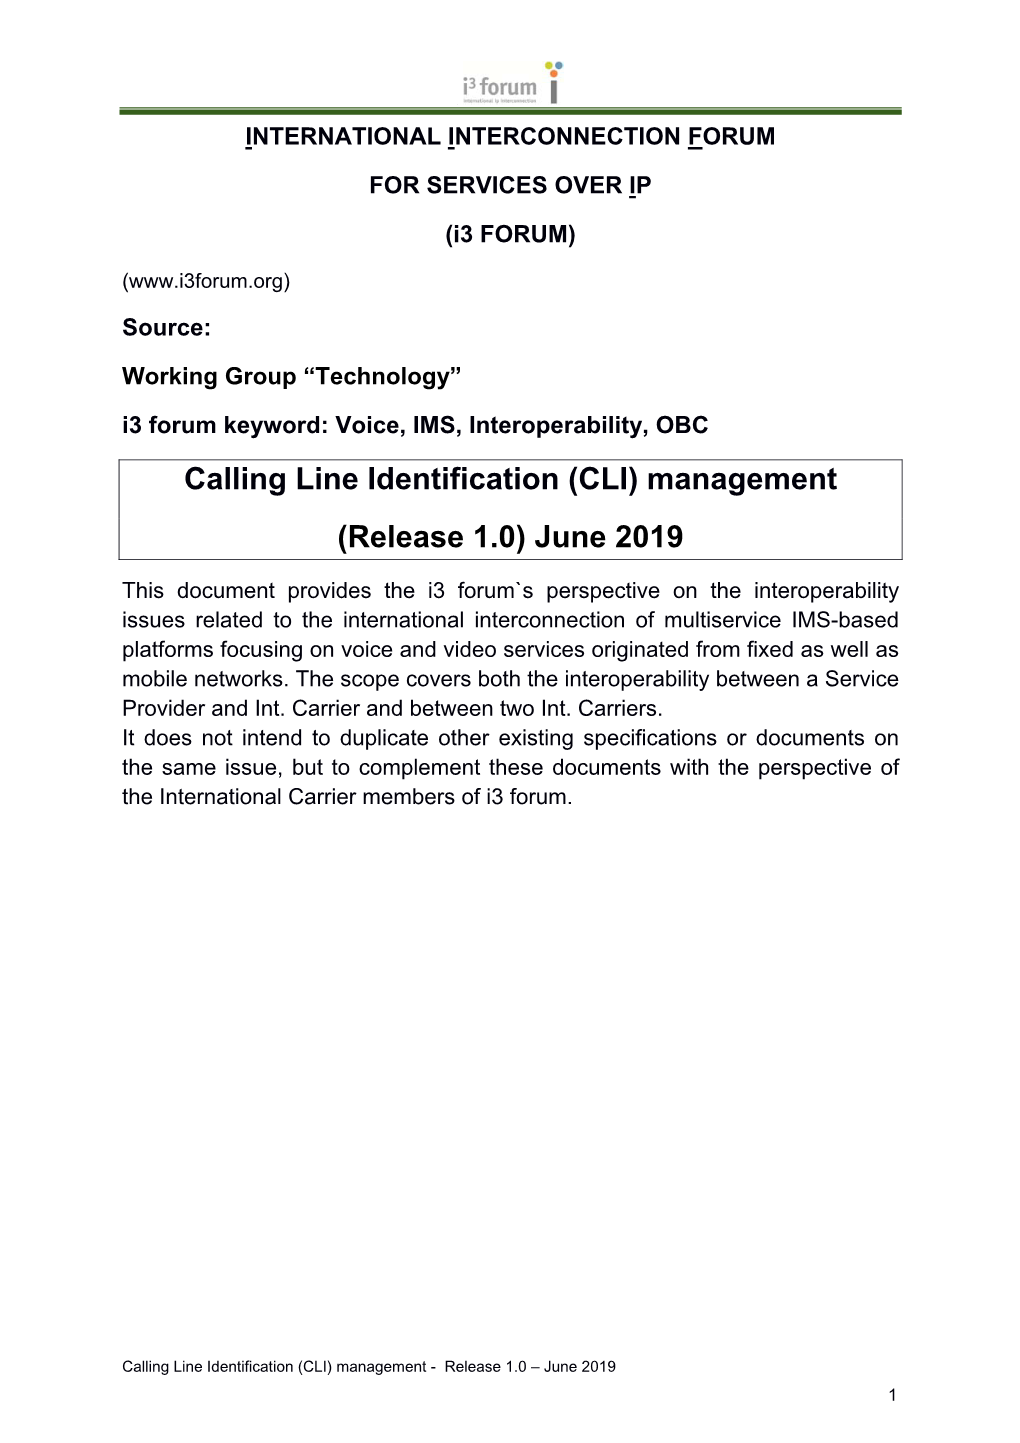 Calling Line Identification (CLI) Management (Release 1.0) June 2019